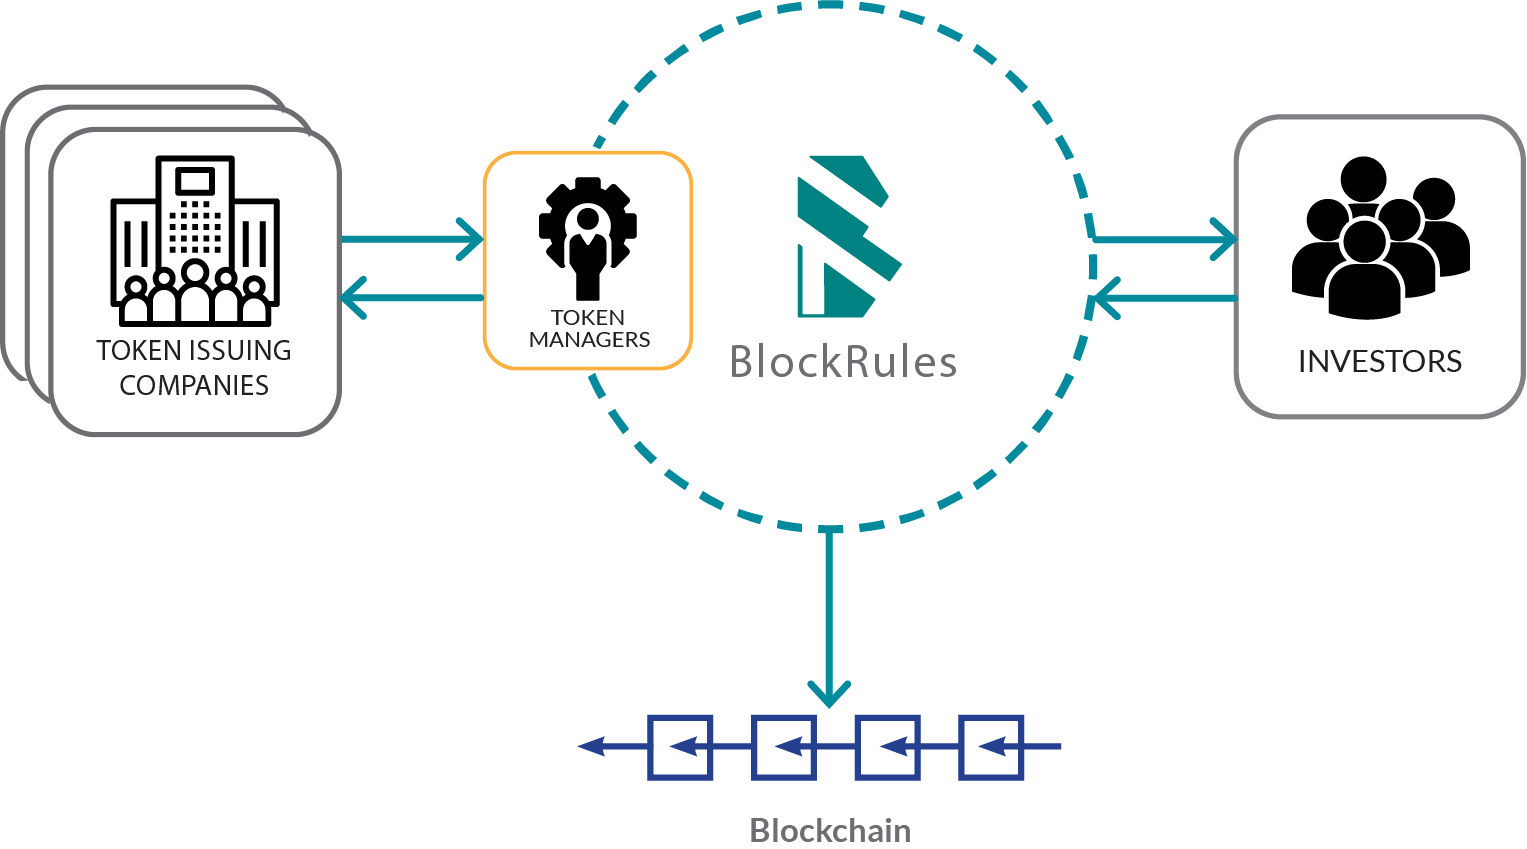 BlockRules diagram